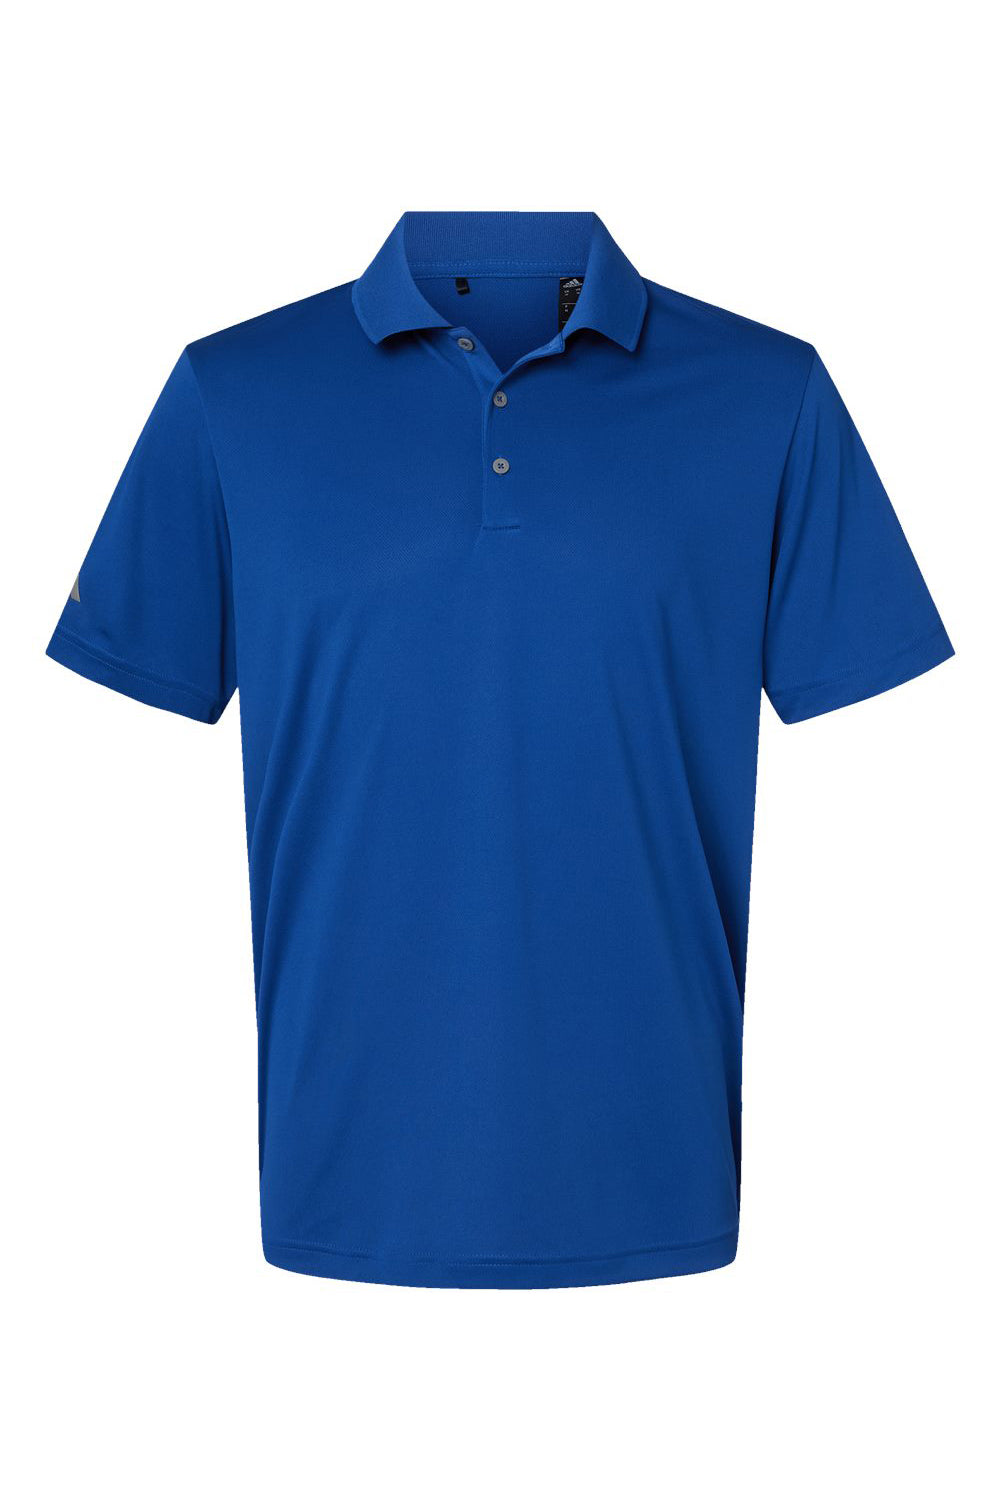 Adidas A230 Mens Performance Short Sleeve Polo Shirt Collegiate Royal Blue Flat Front